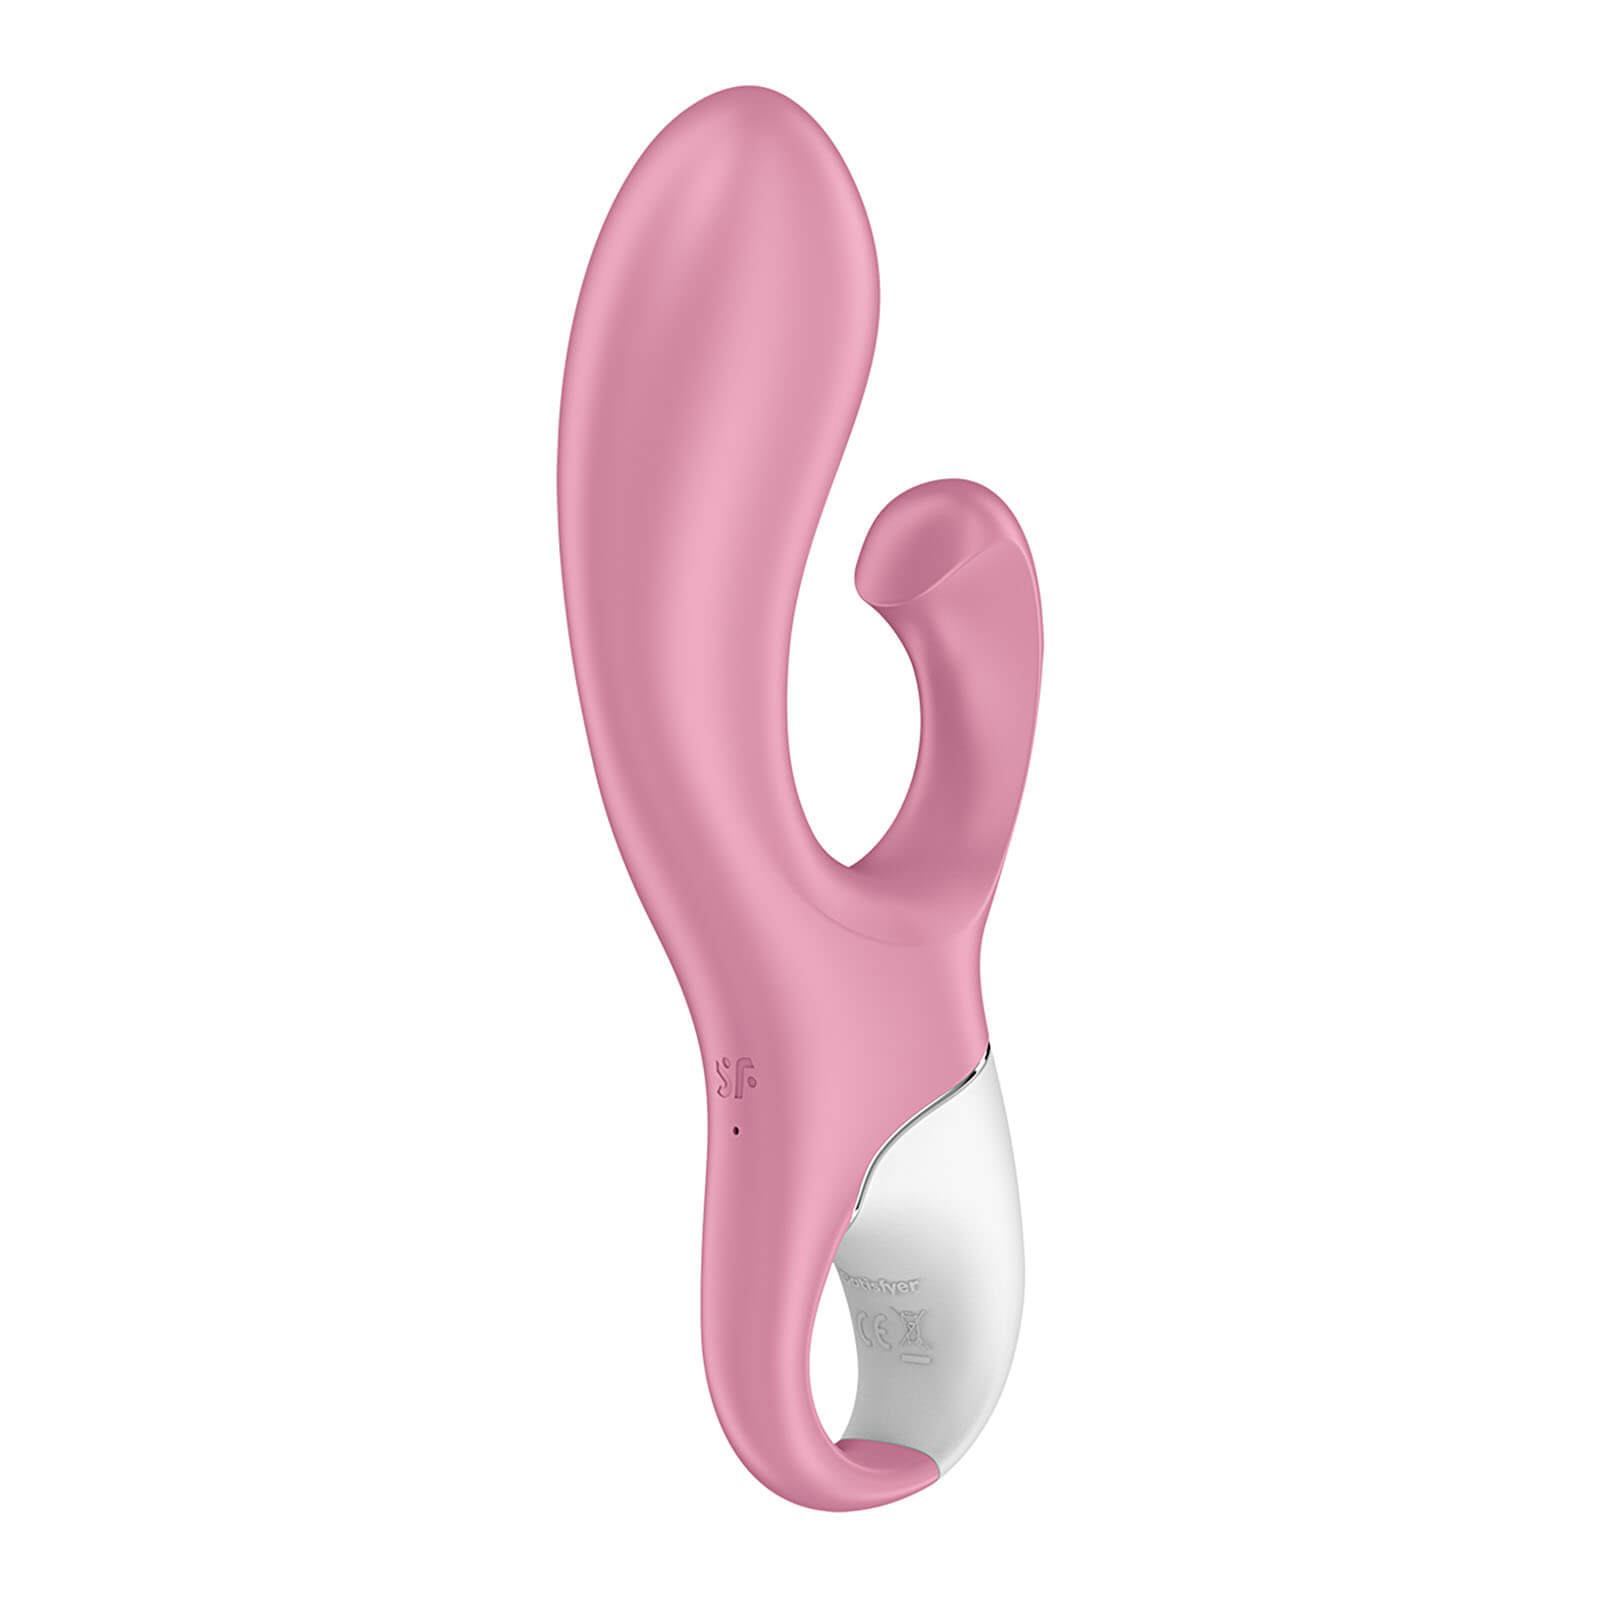 Satisfyer Air Pump Bunny 2 (Pink), inflatable vibrator